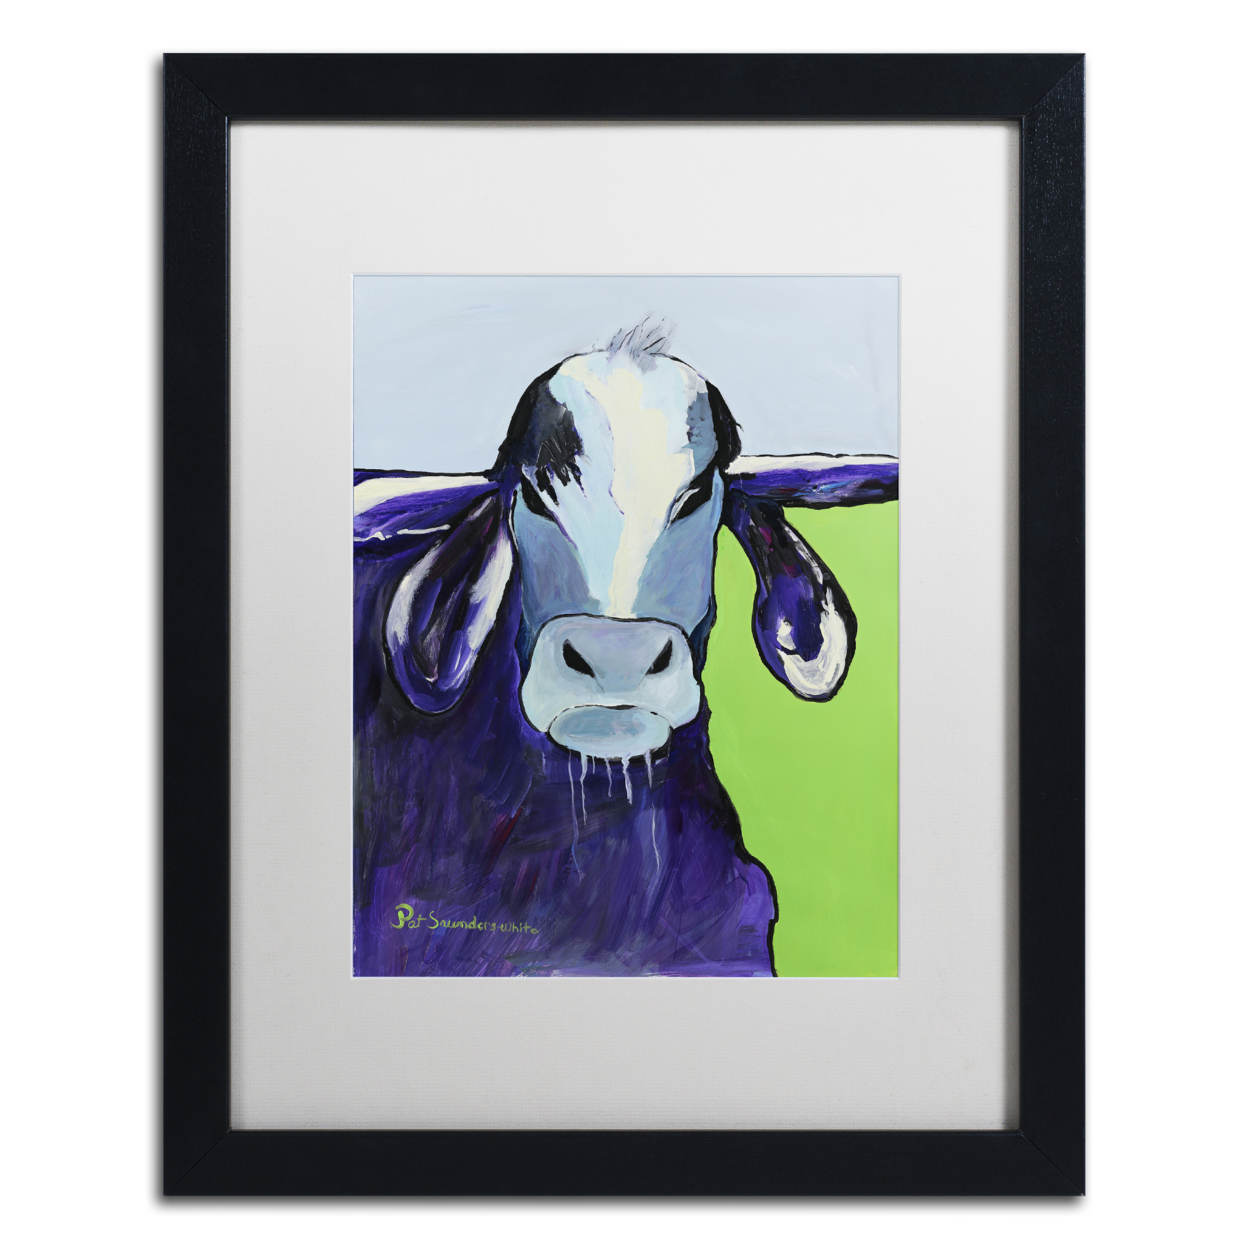 Pat Saunders-White 'Bull Drool' Black Wooden Framed Art 18 X 22 Inches